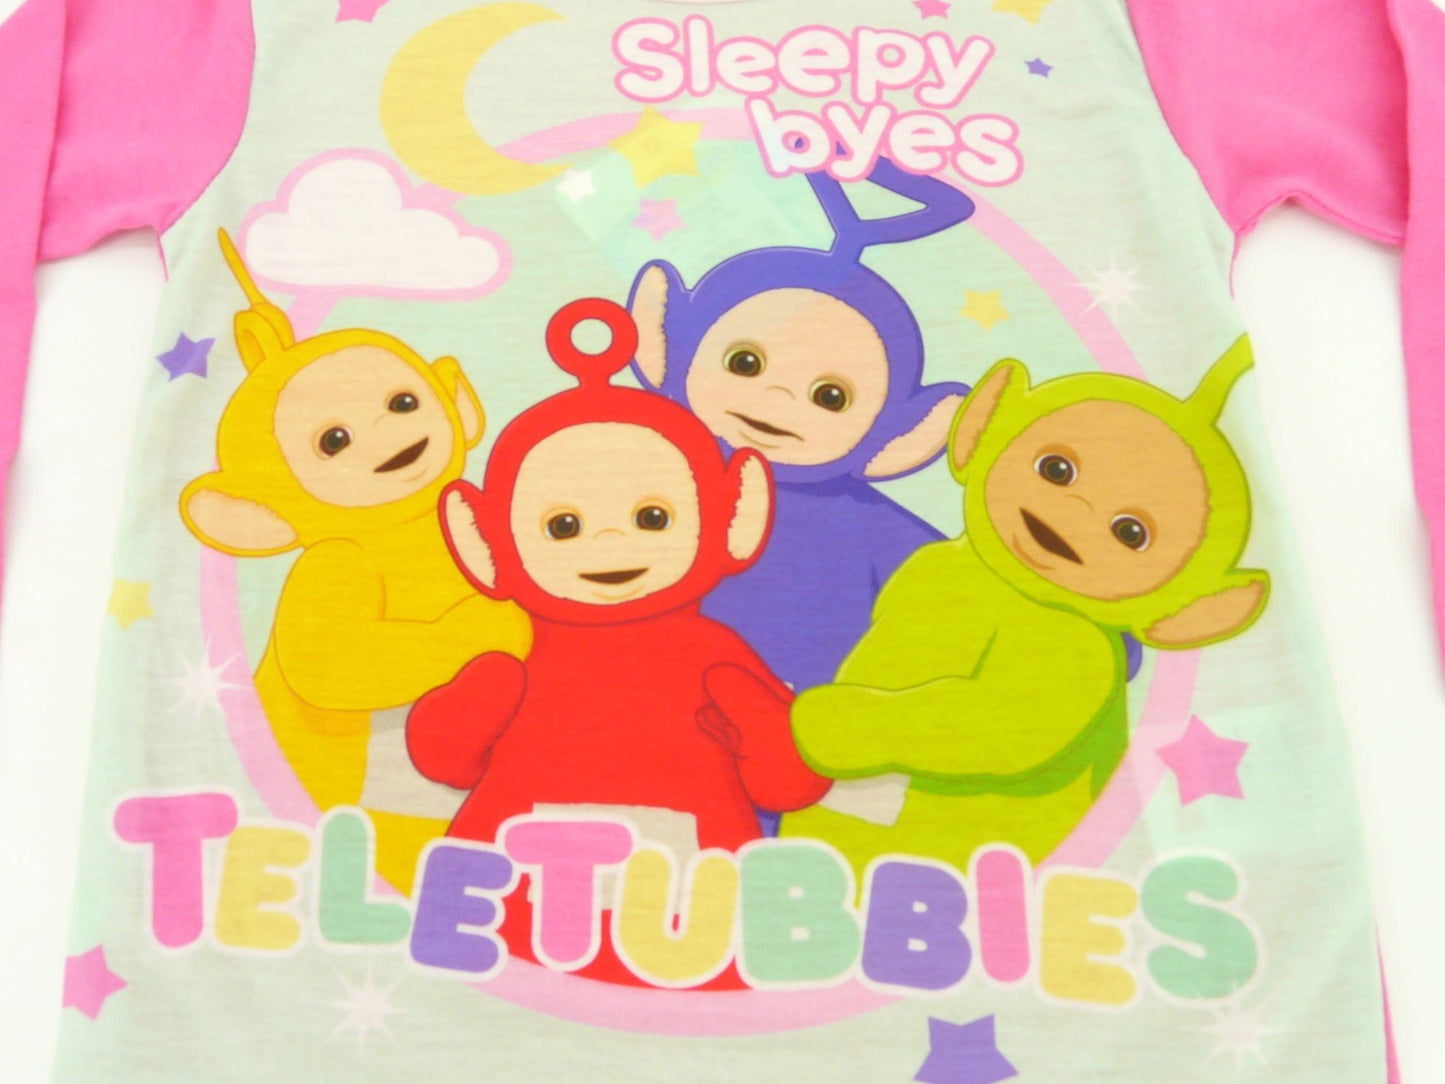 Teletubbies "Sleepy Byes" Girl's Cotton Pyjamas